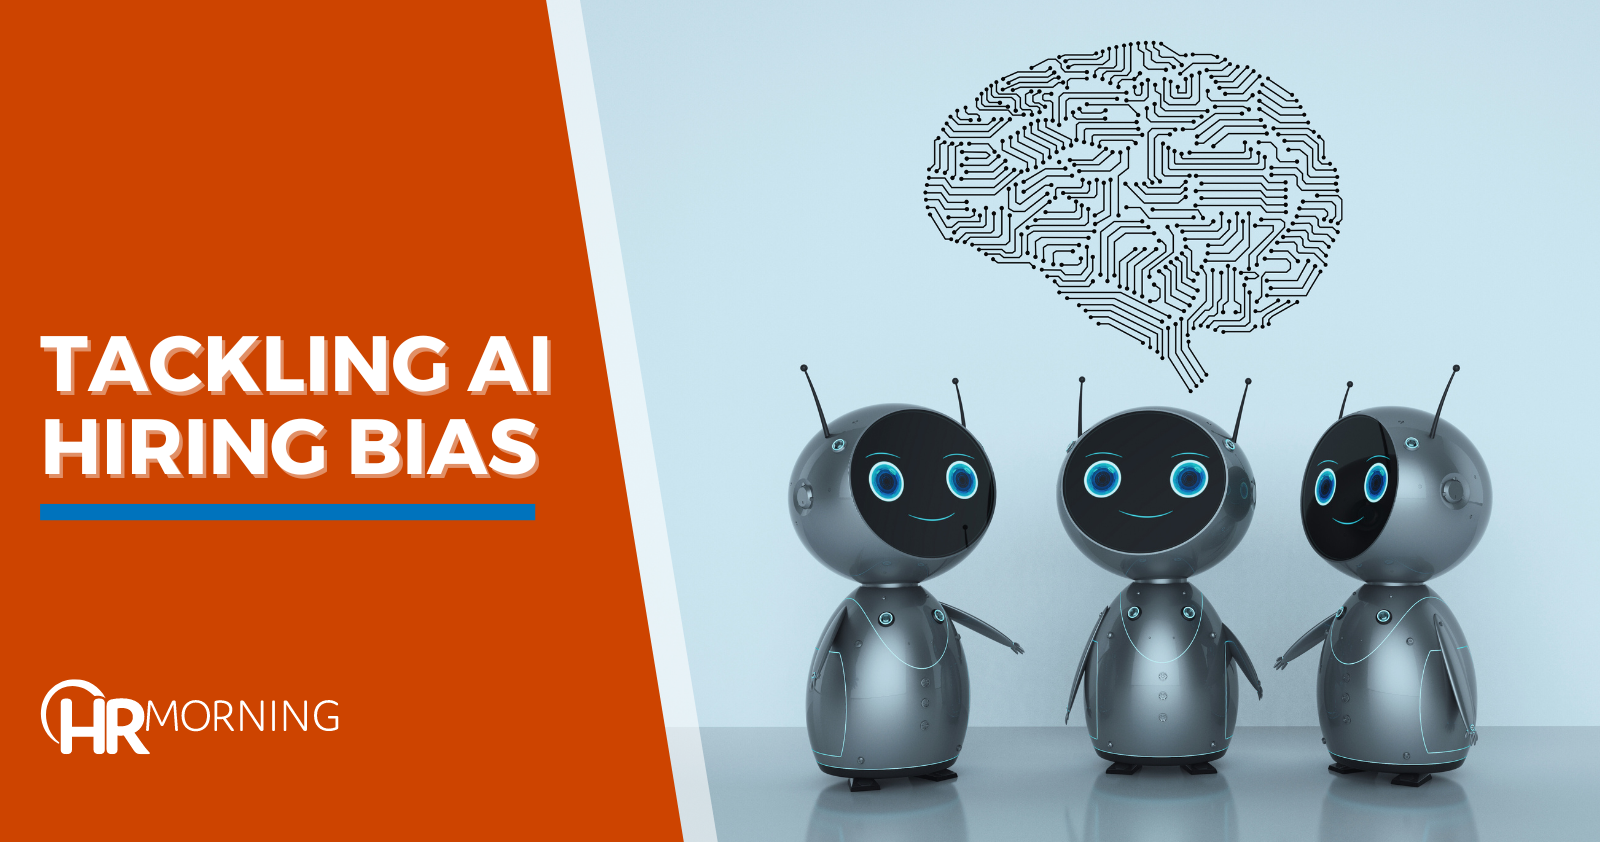 Tackling AI hiring bias